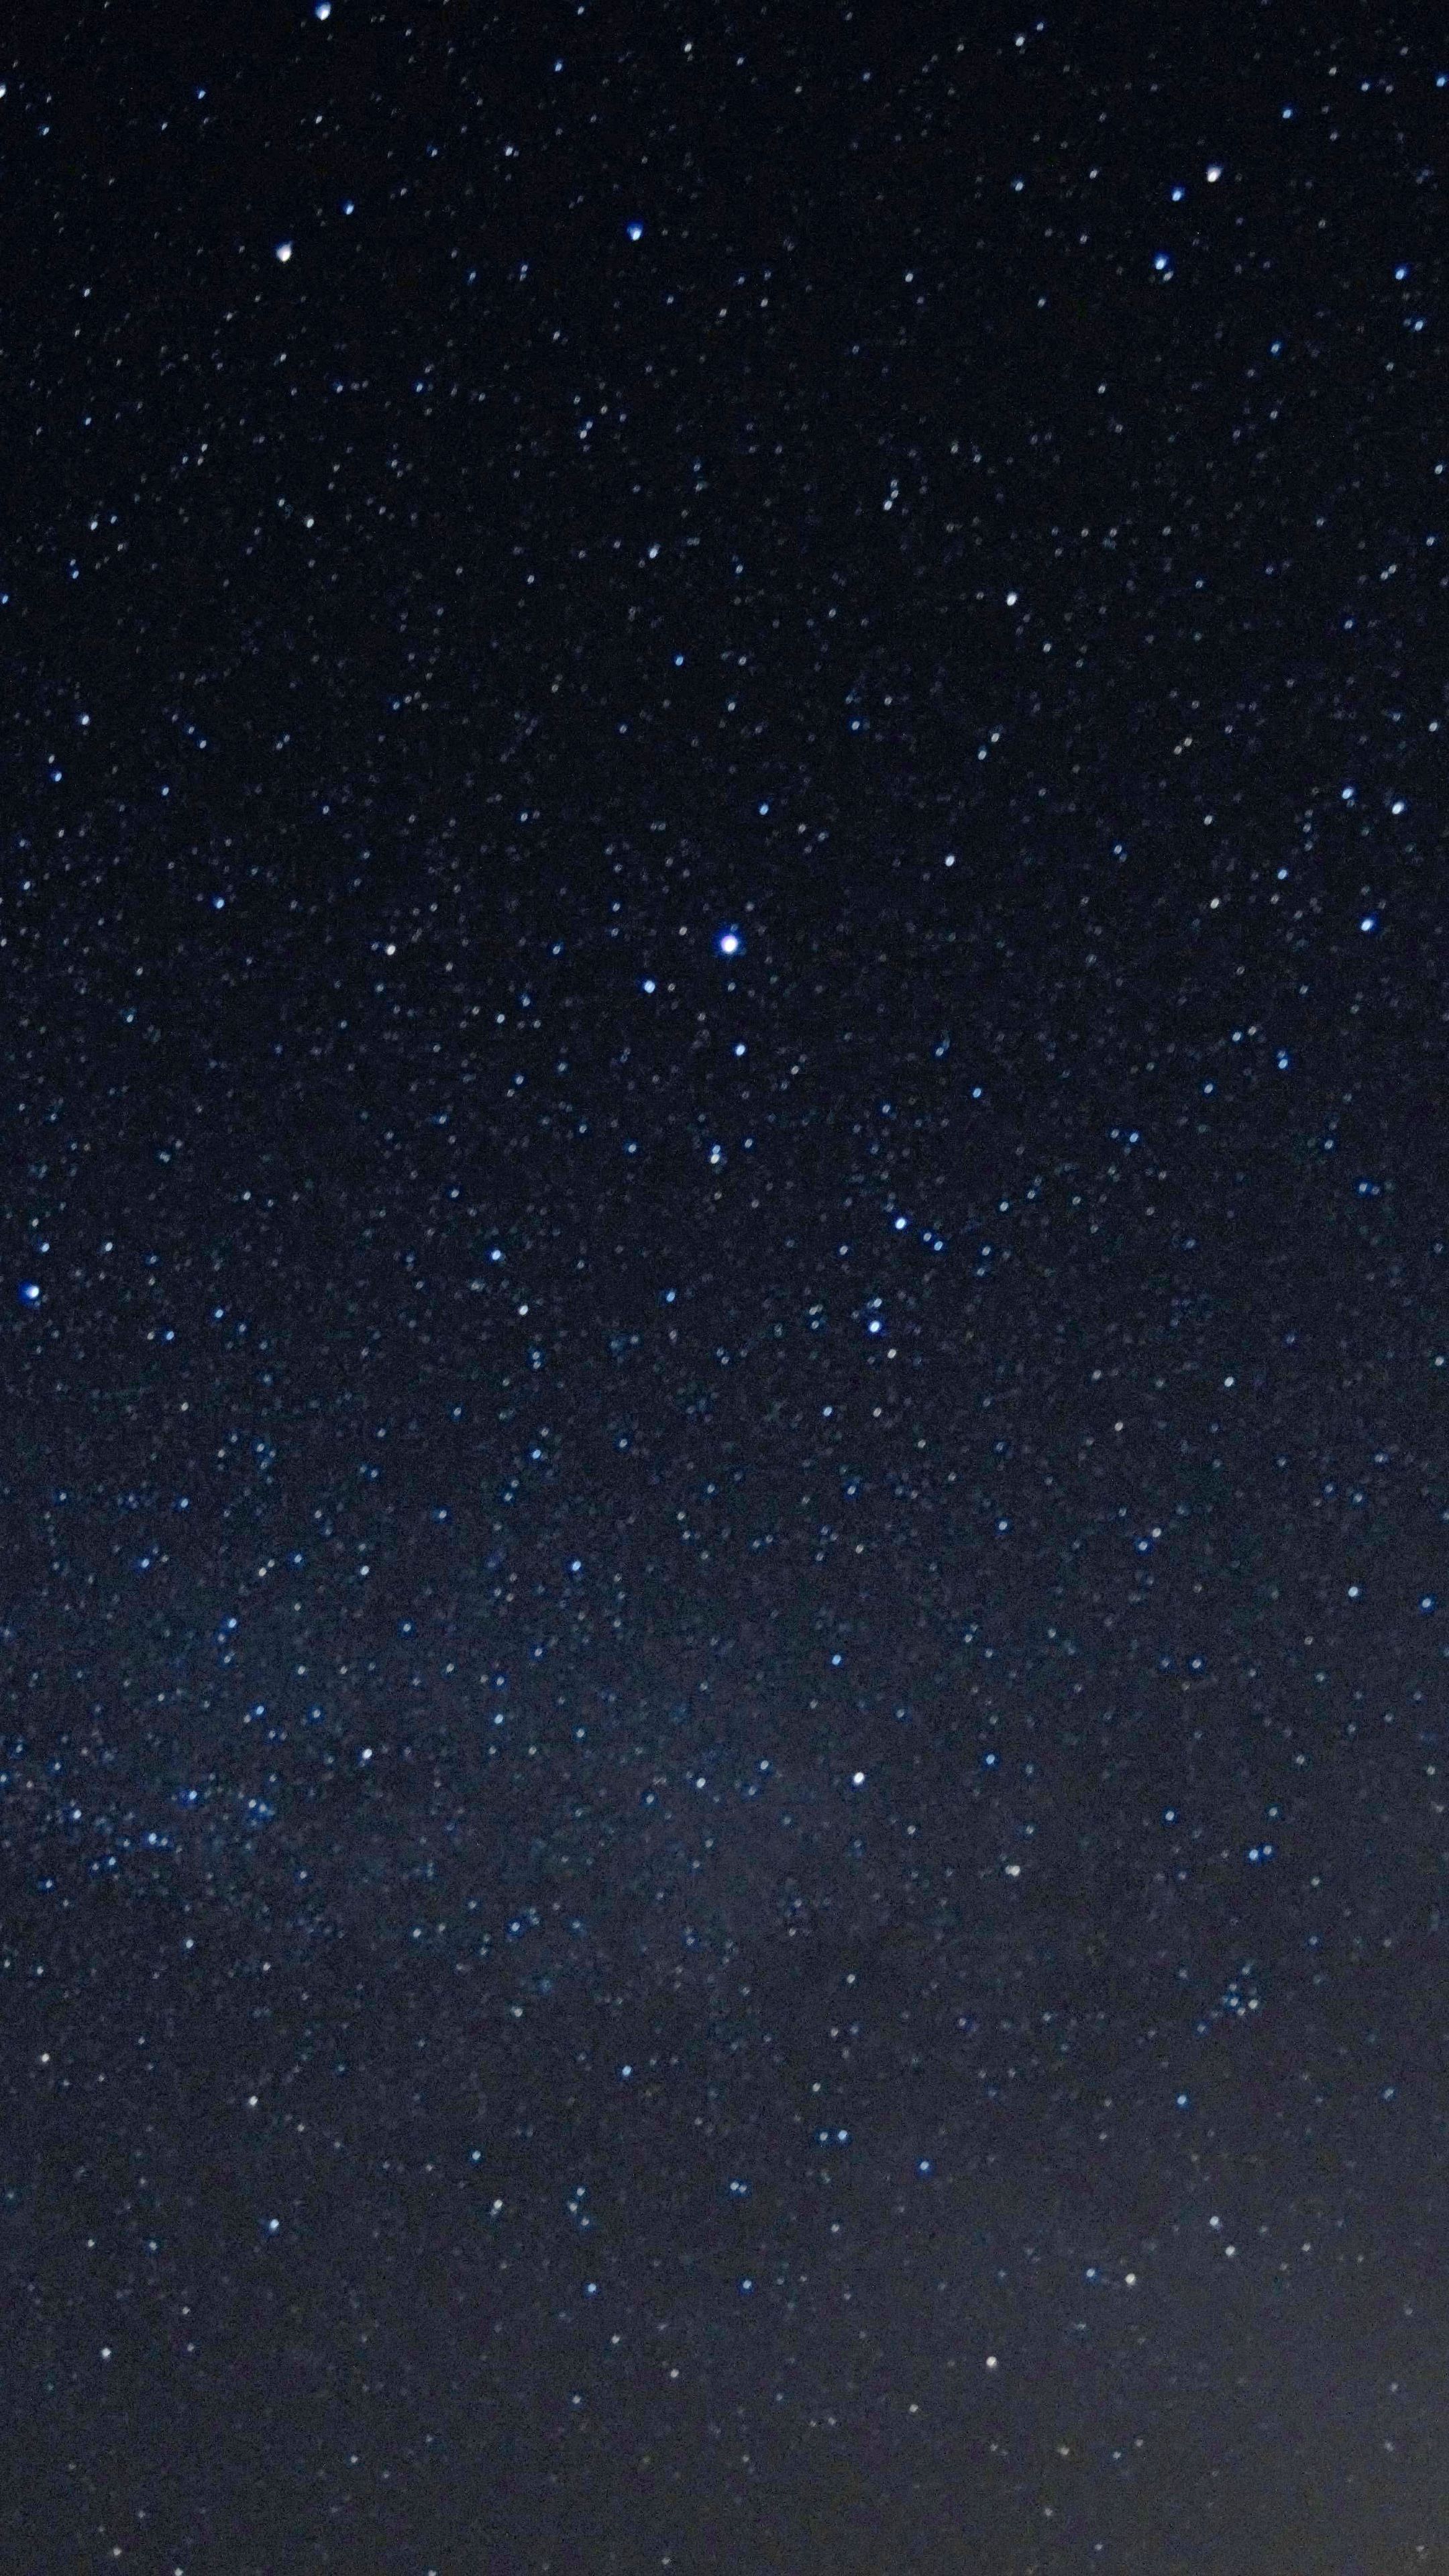 Sky #starrysky #night #stars #wallpaper HD 4k background for android :)